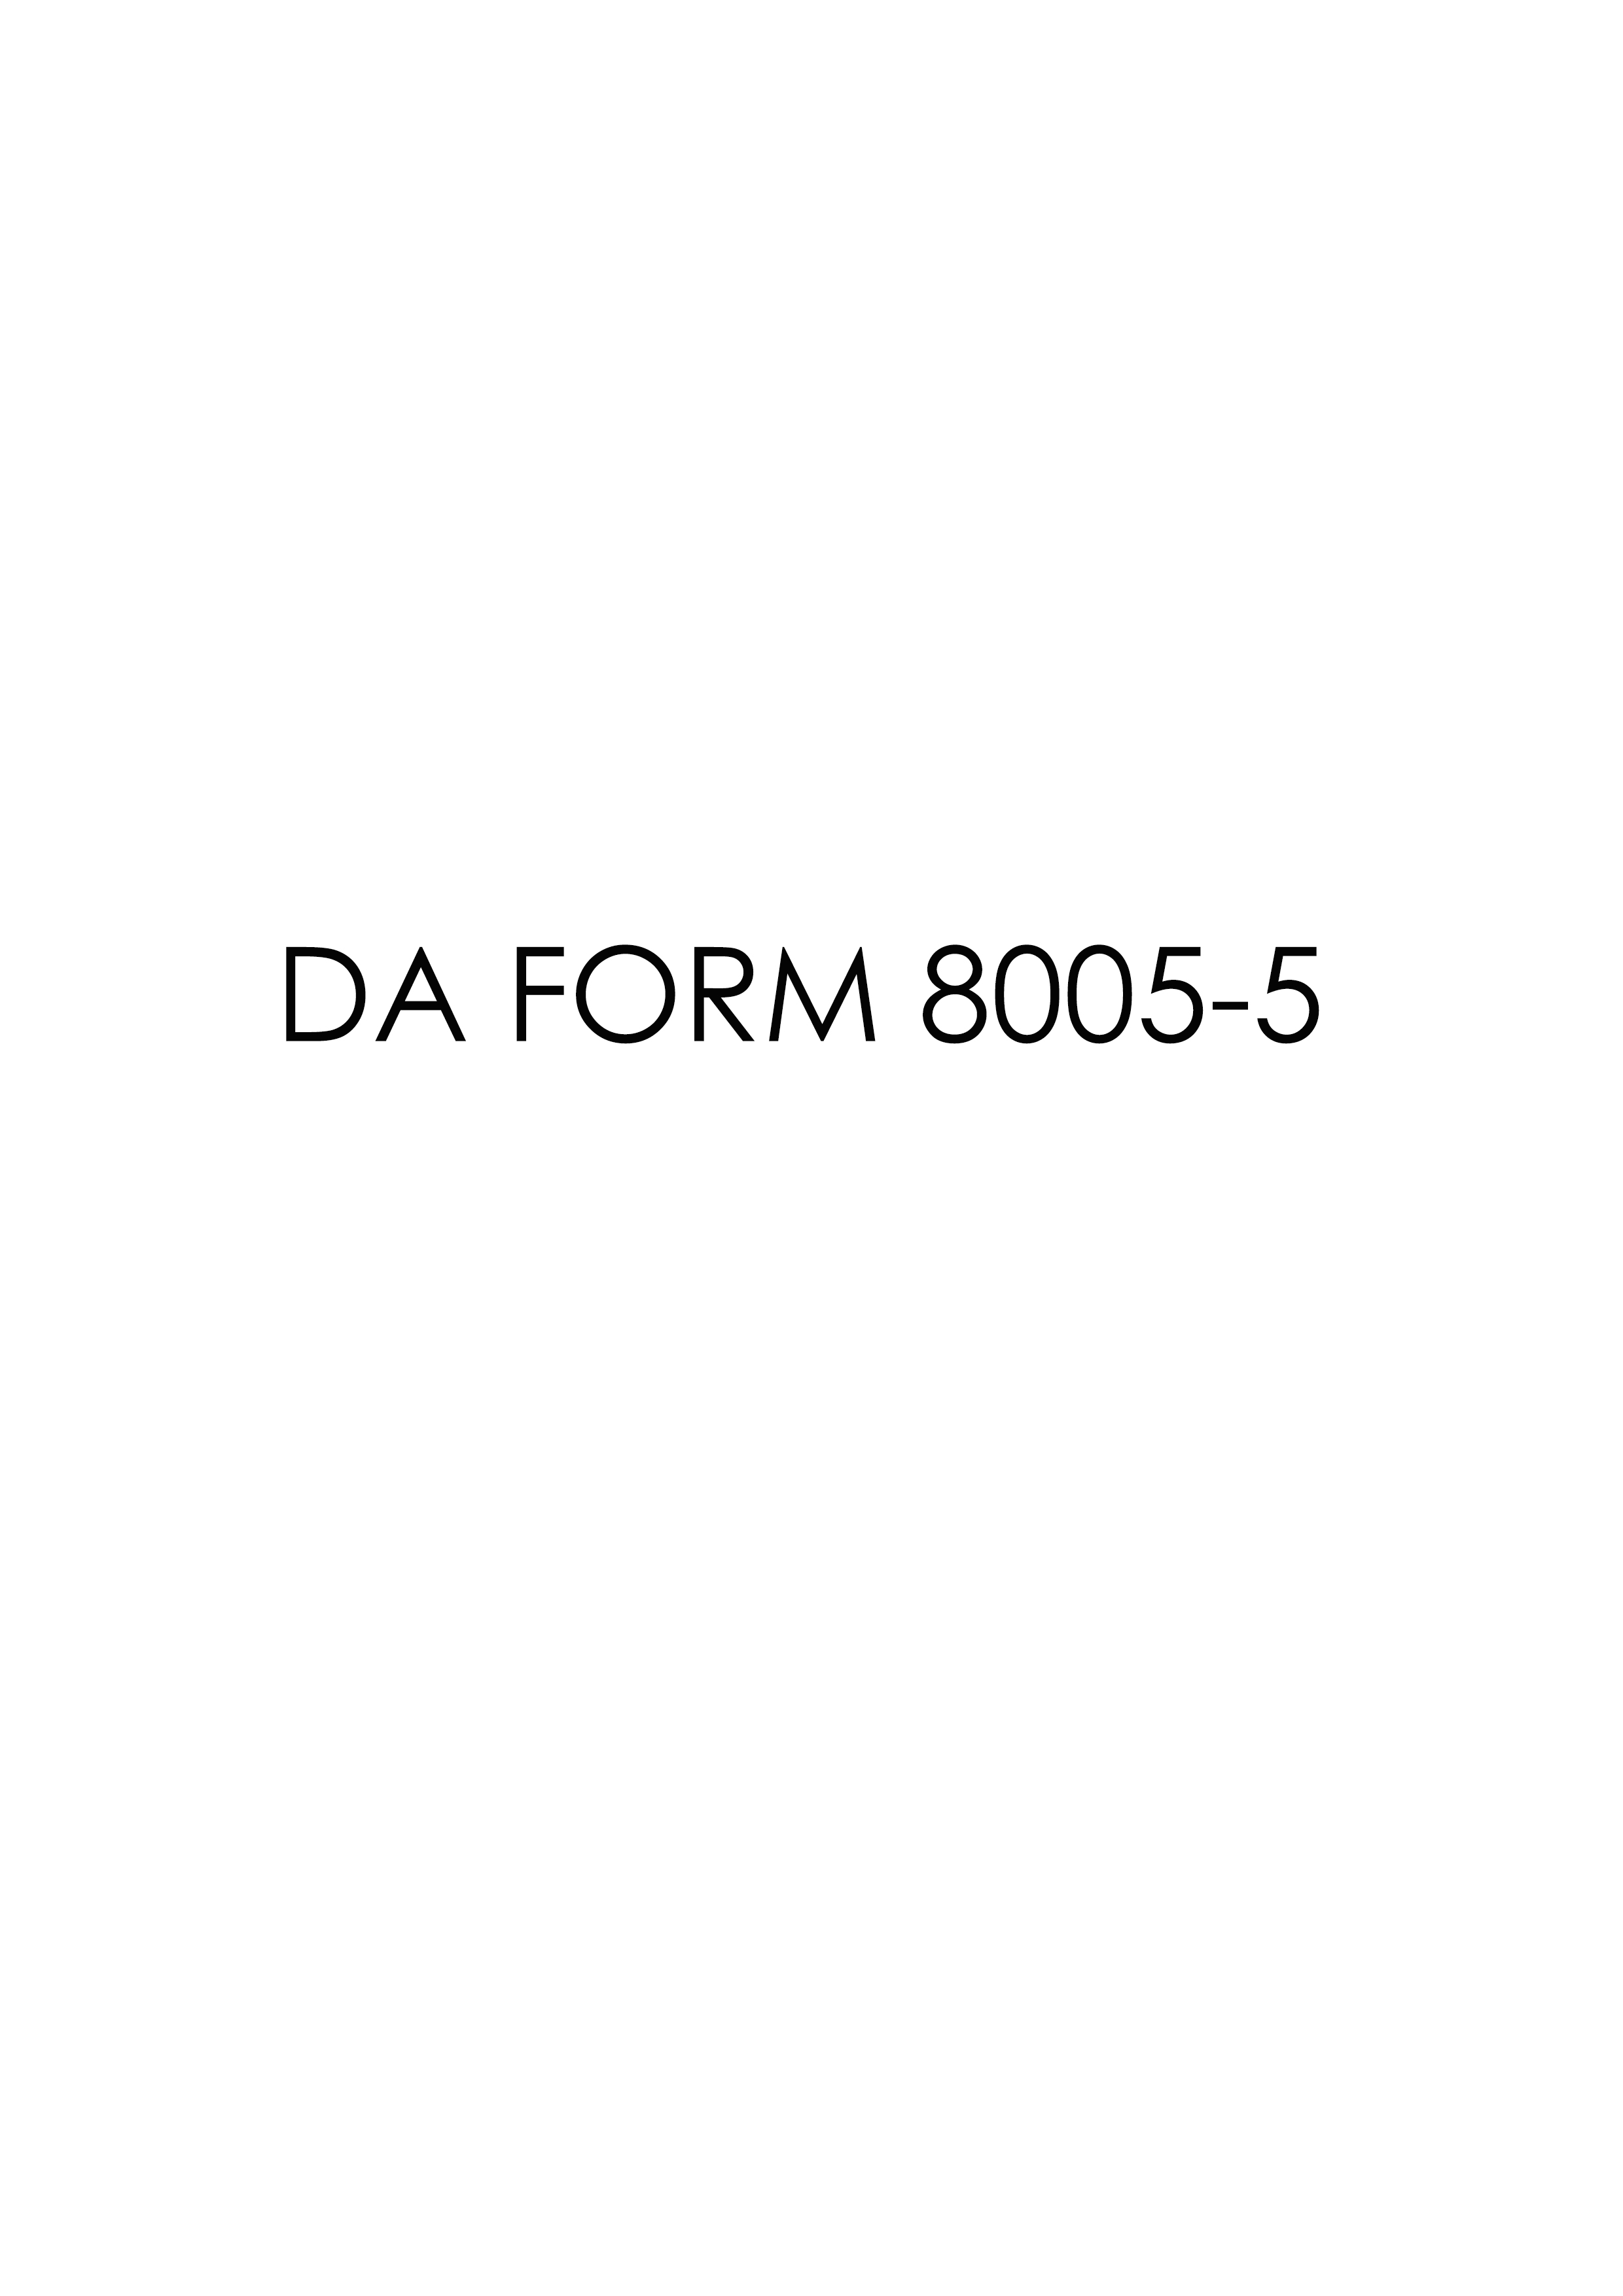 Download da form 8005-5